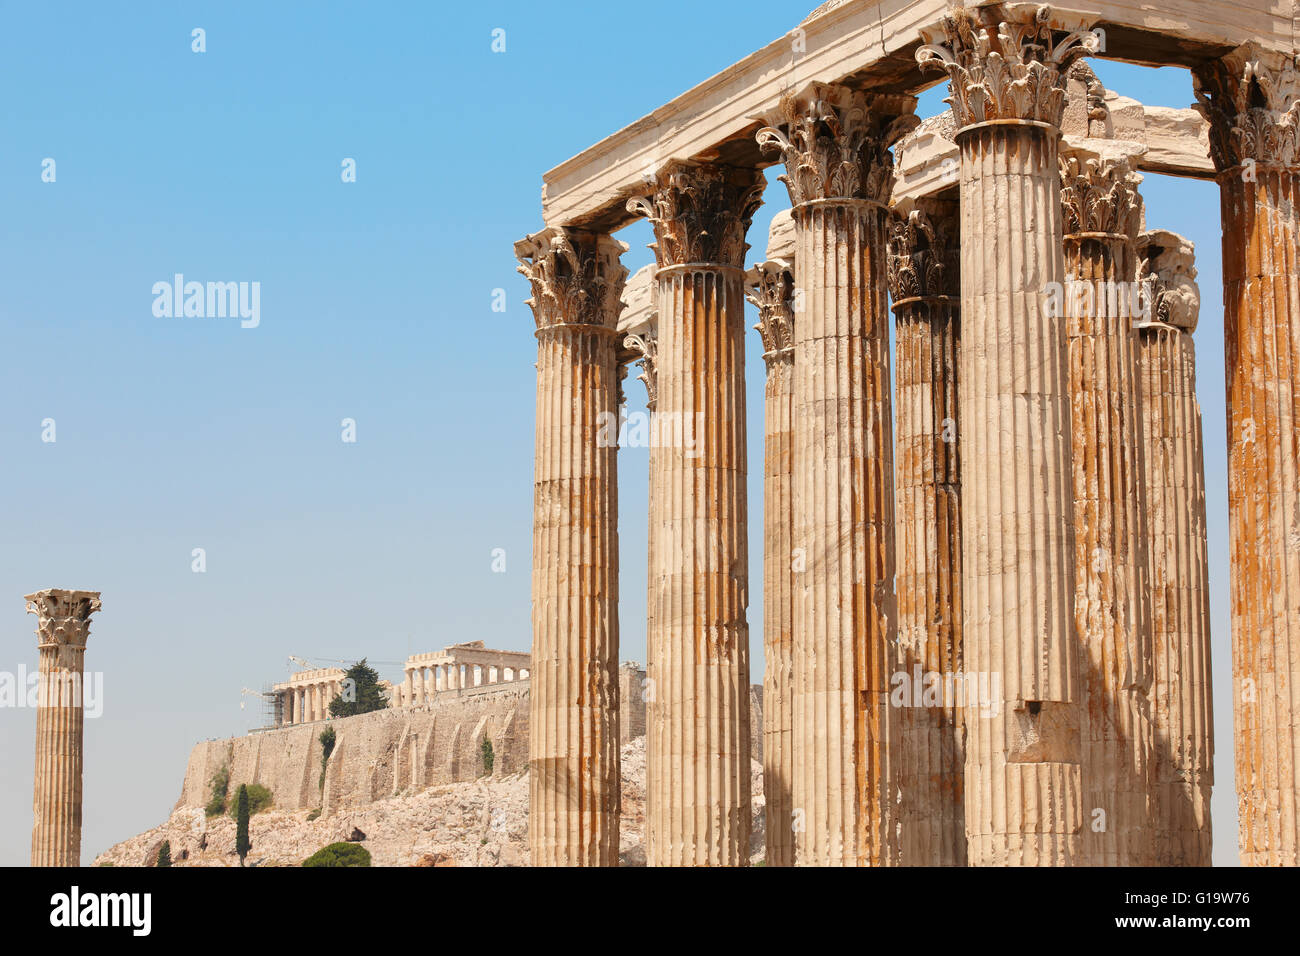 Temple of Zeus and Acropolis in Athens. Greece. Horizontal Stock Photo